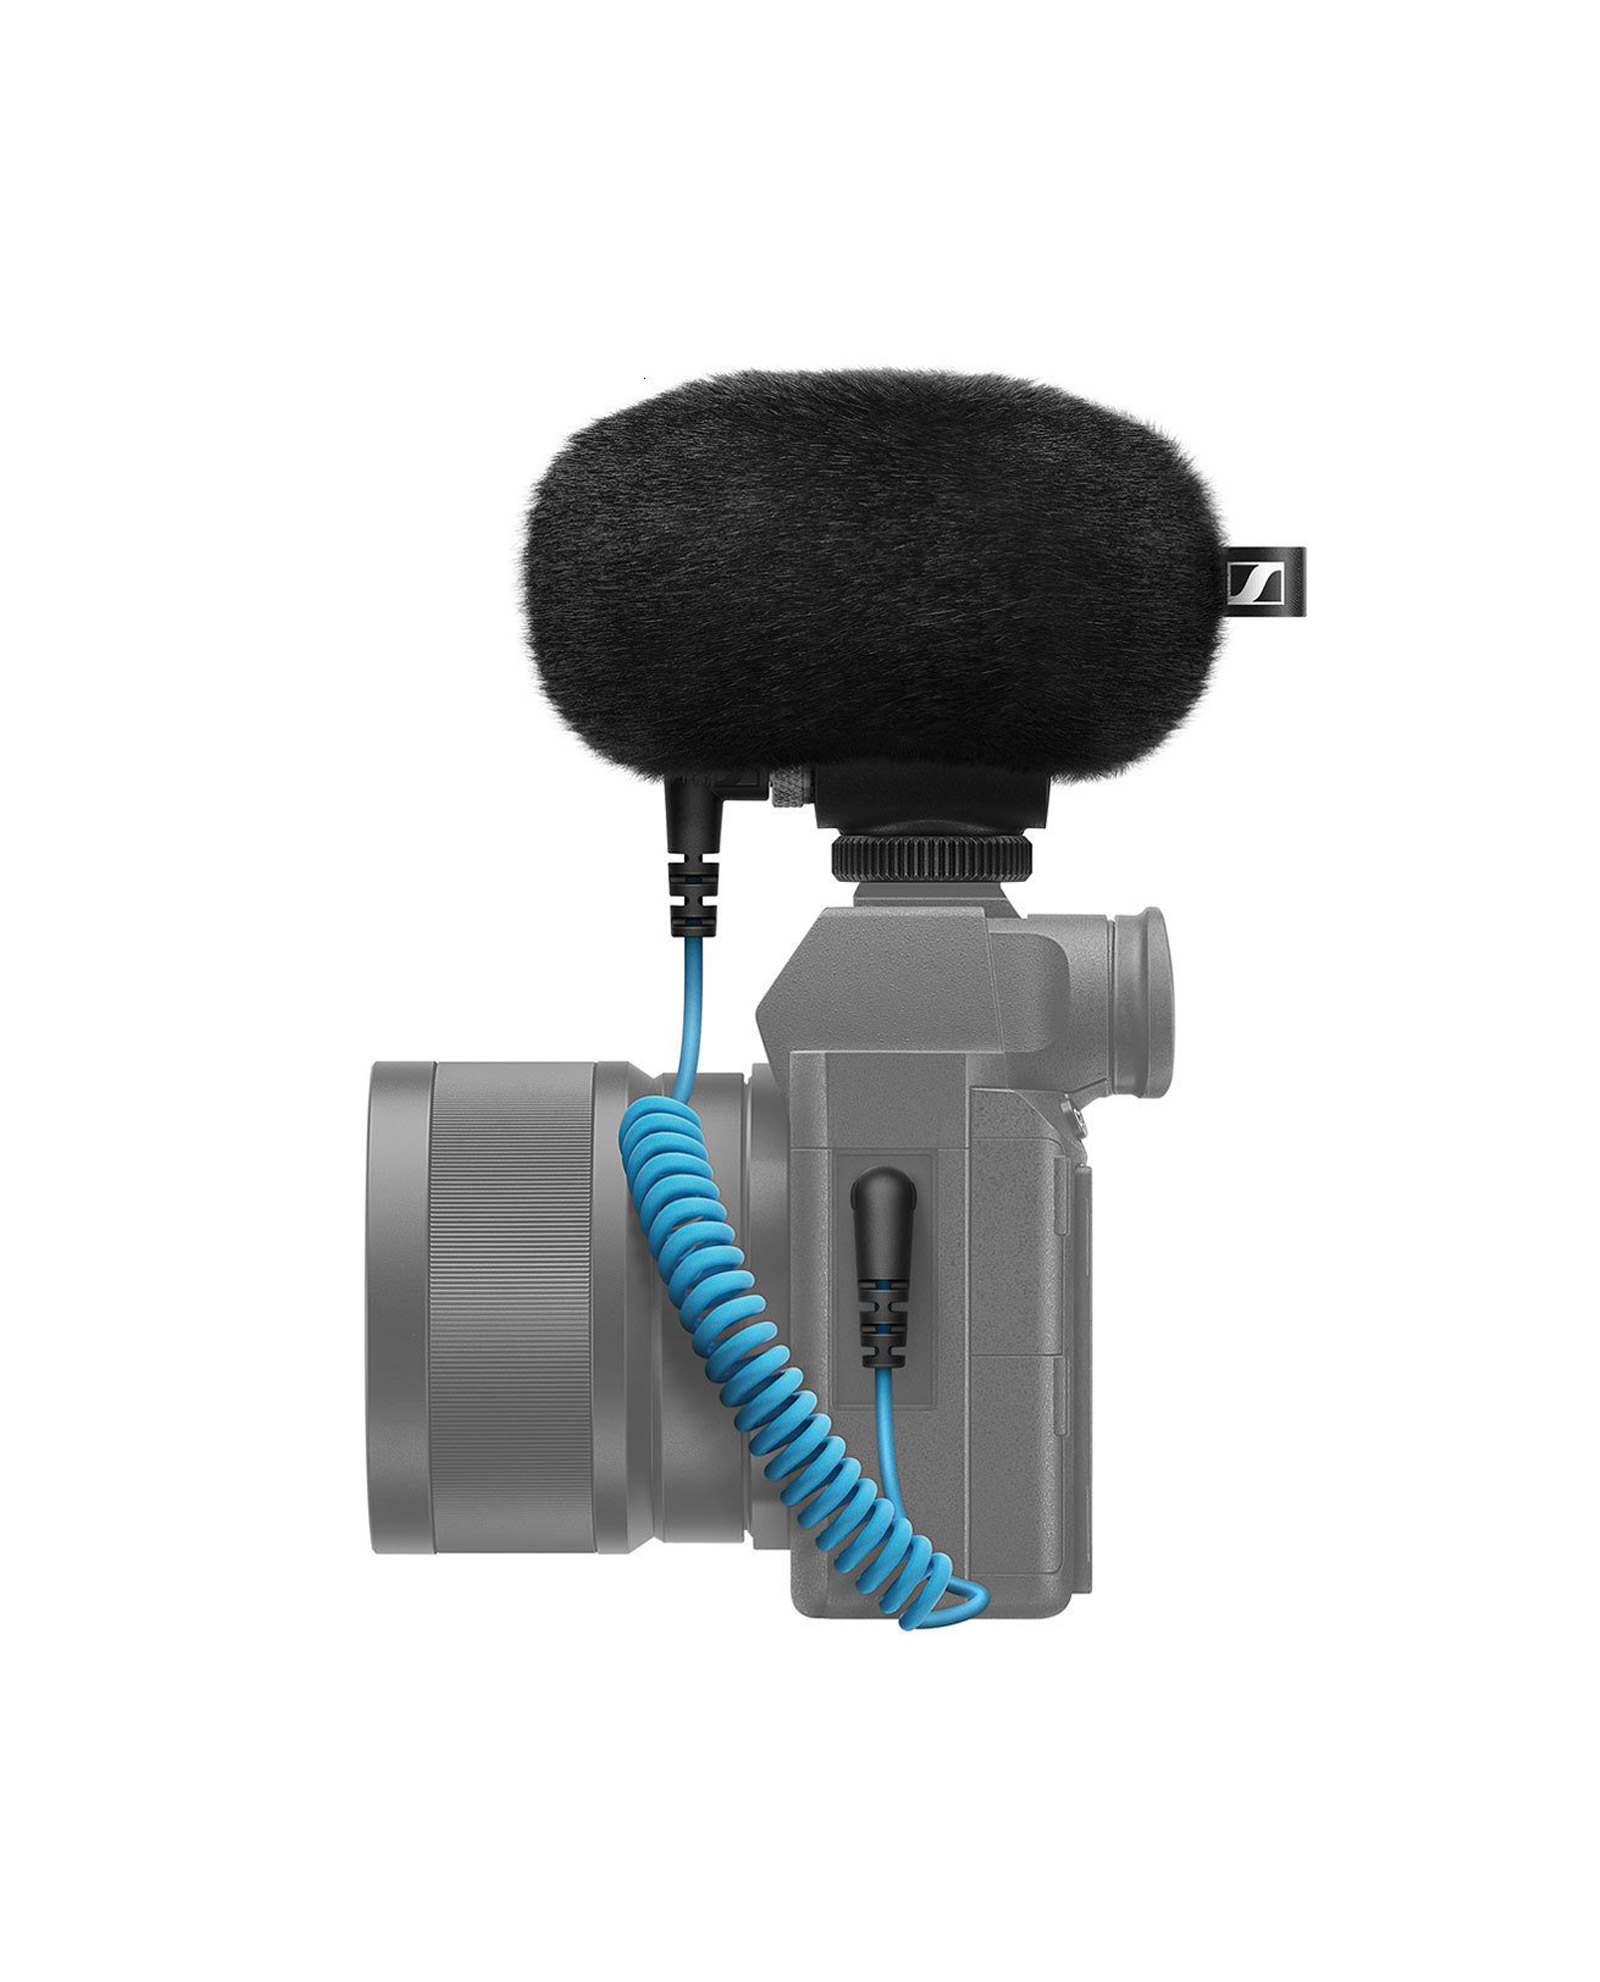 Sennheiser Mke 200 Compact Super Cardioid On Camera Microphone 3